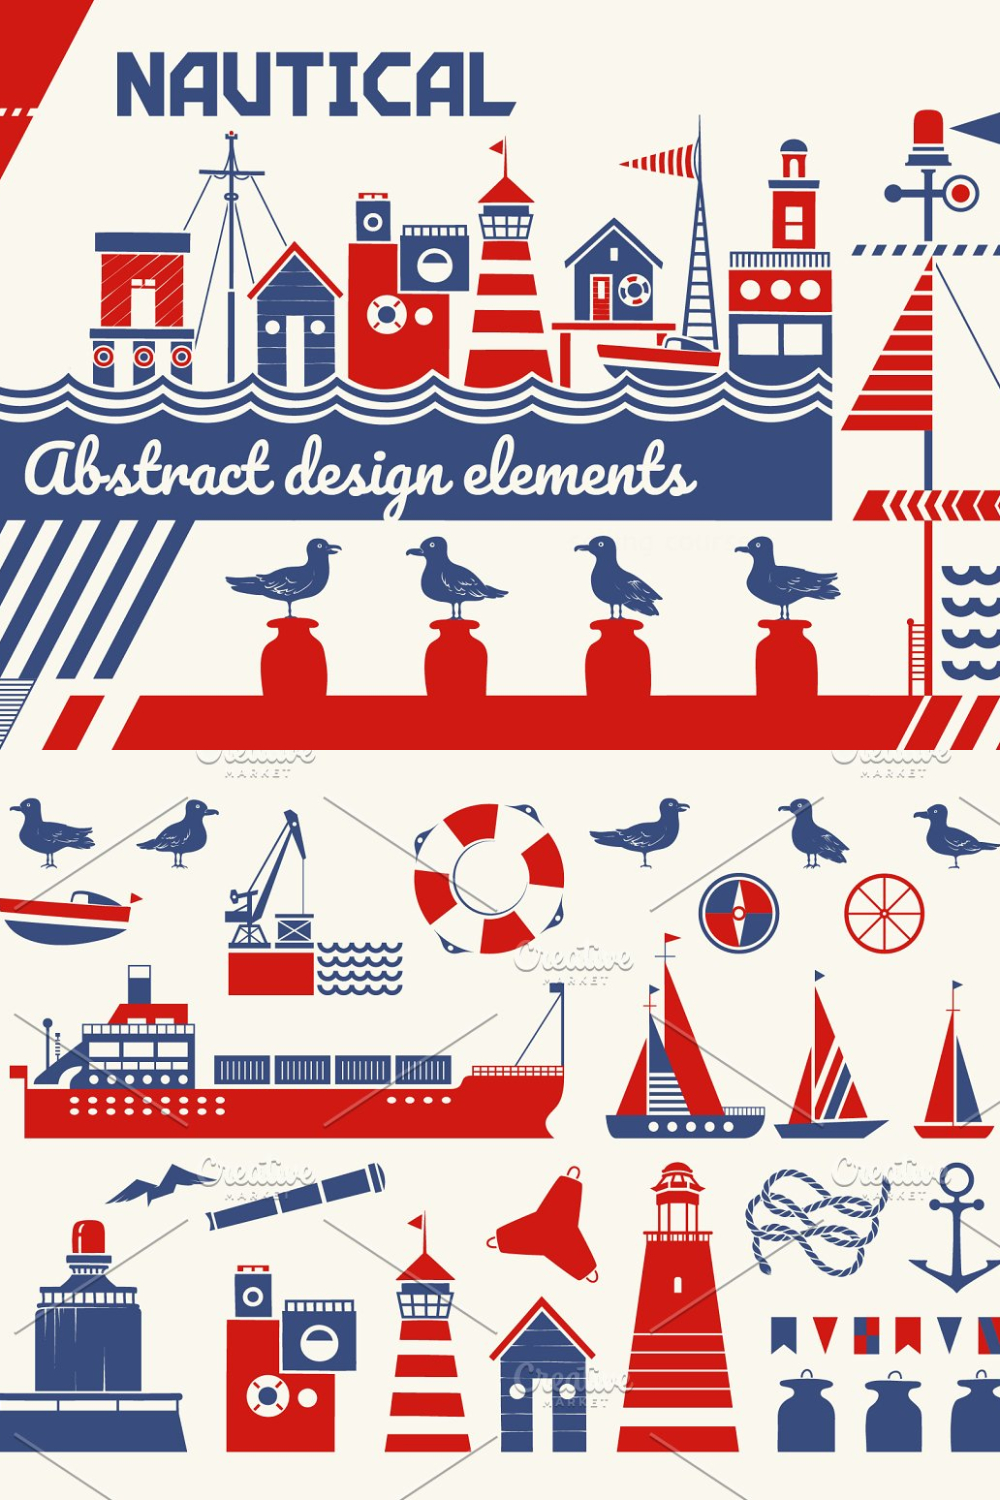 Nautical Abstract Retro Decorations - Pinterest.